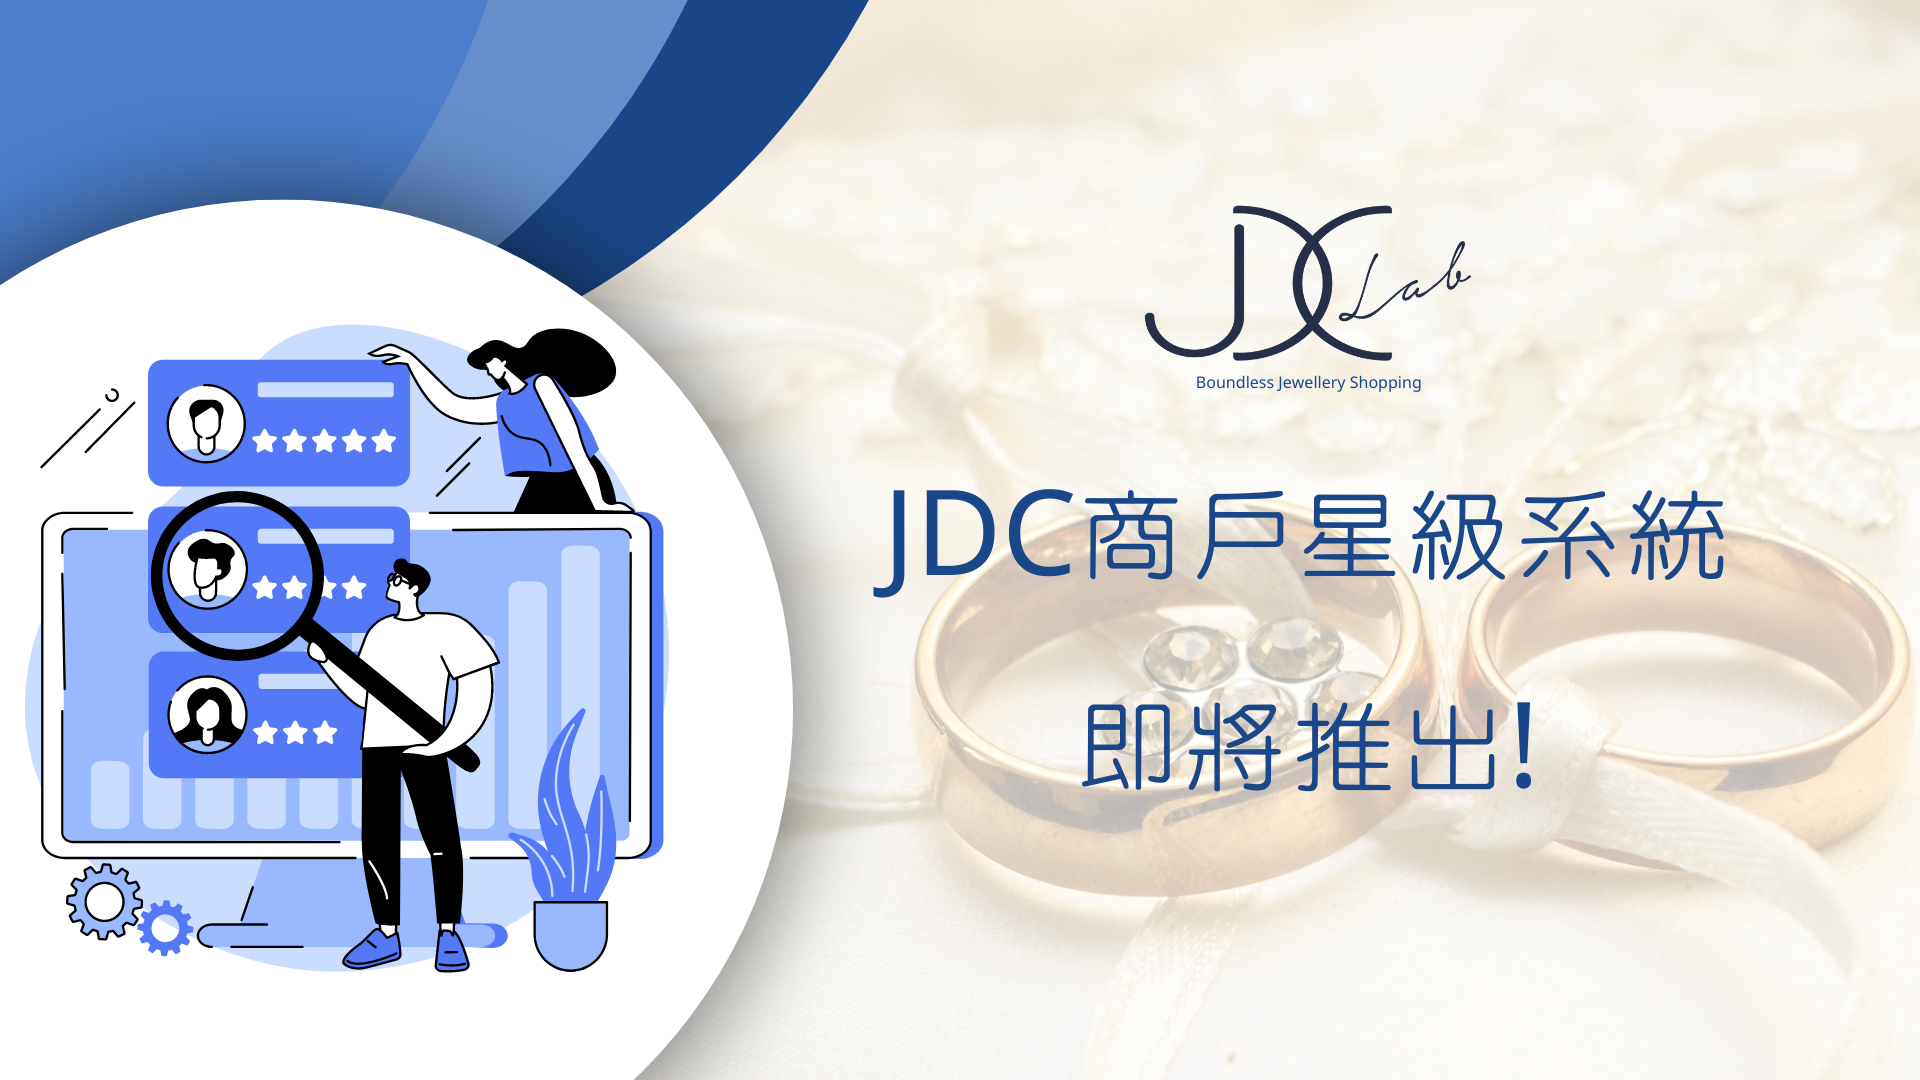 JDC Lab推出「星級系統」提高珠寶購物的質素保證！